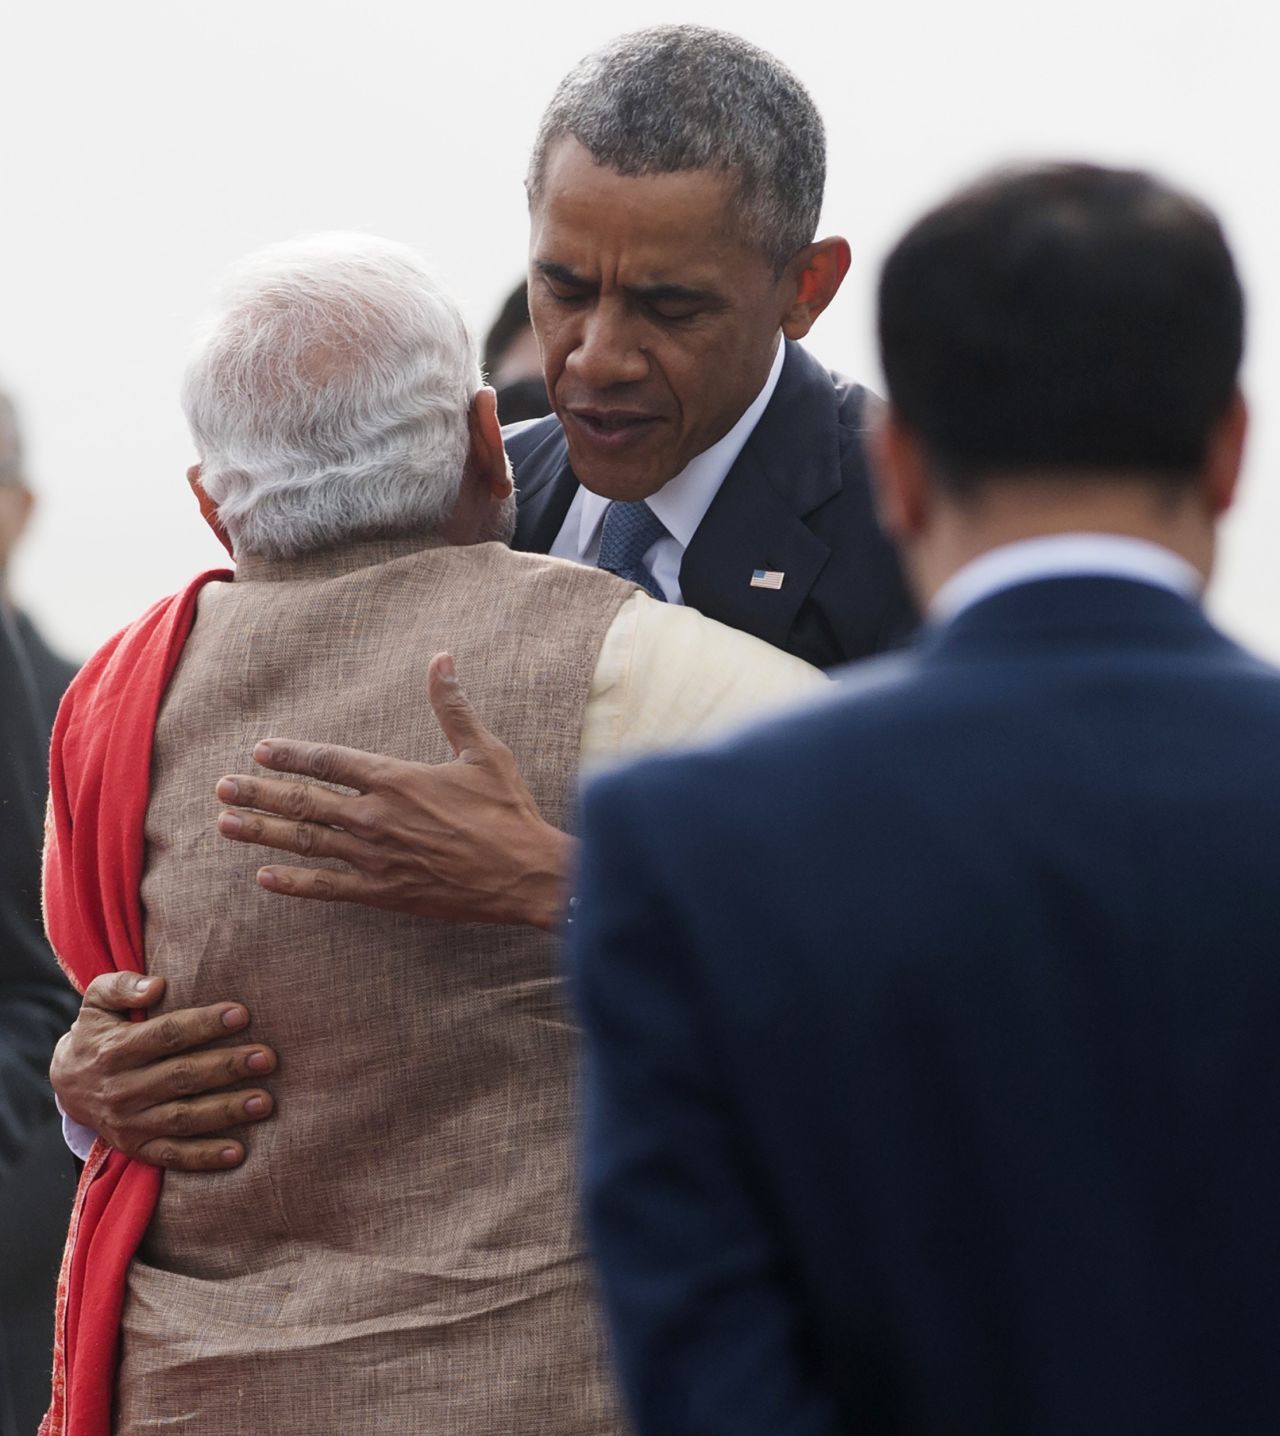  Modi hugs Obama after Obama's arrival in New Delhi.